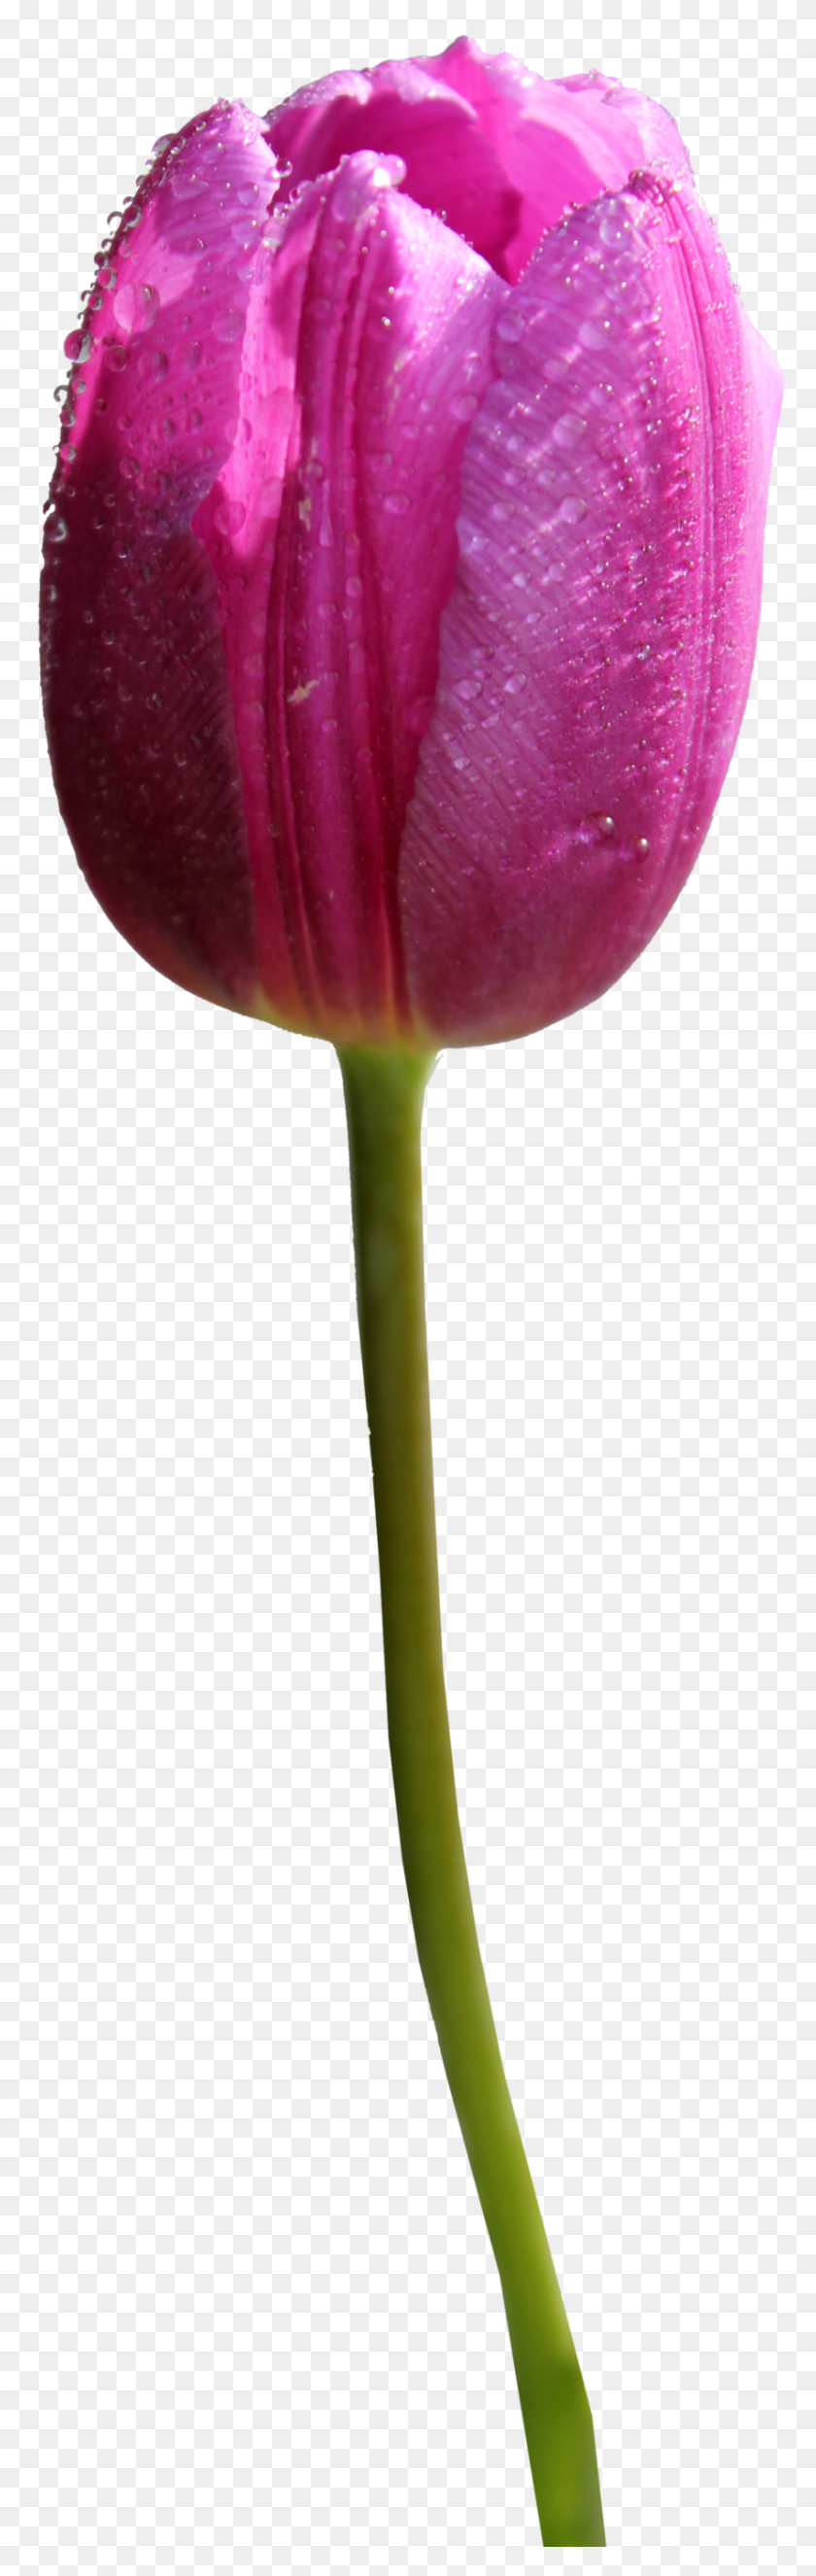 830x2758 Tulip Clipart Black And White Graphics Botanical Flower Image - Tulip Images Clip Art